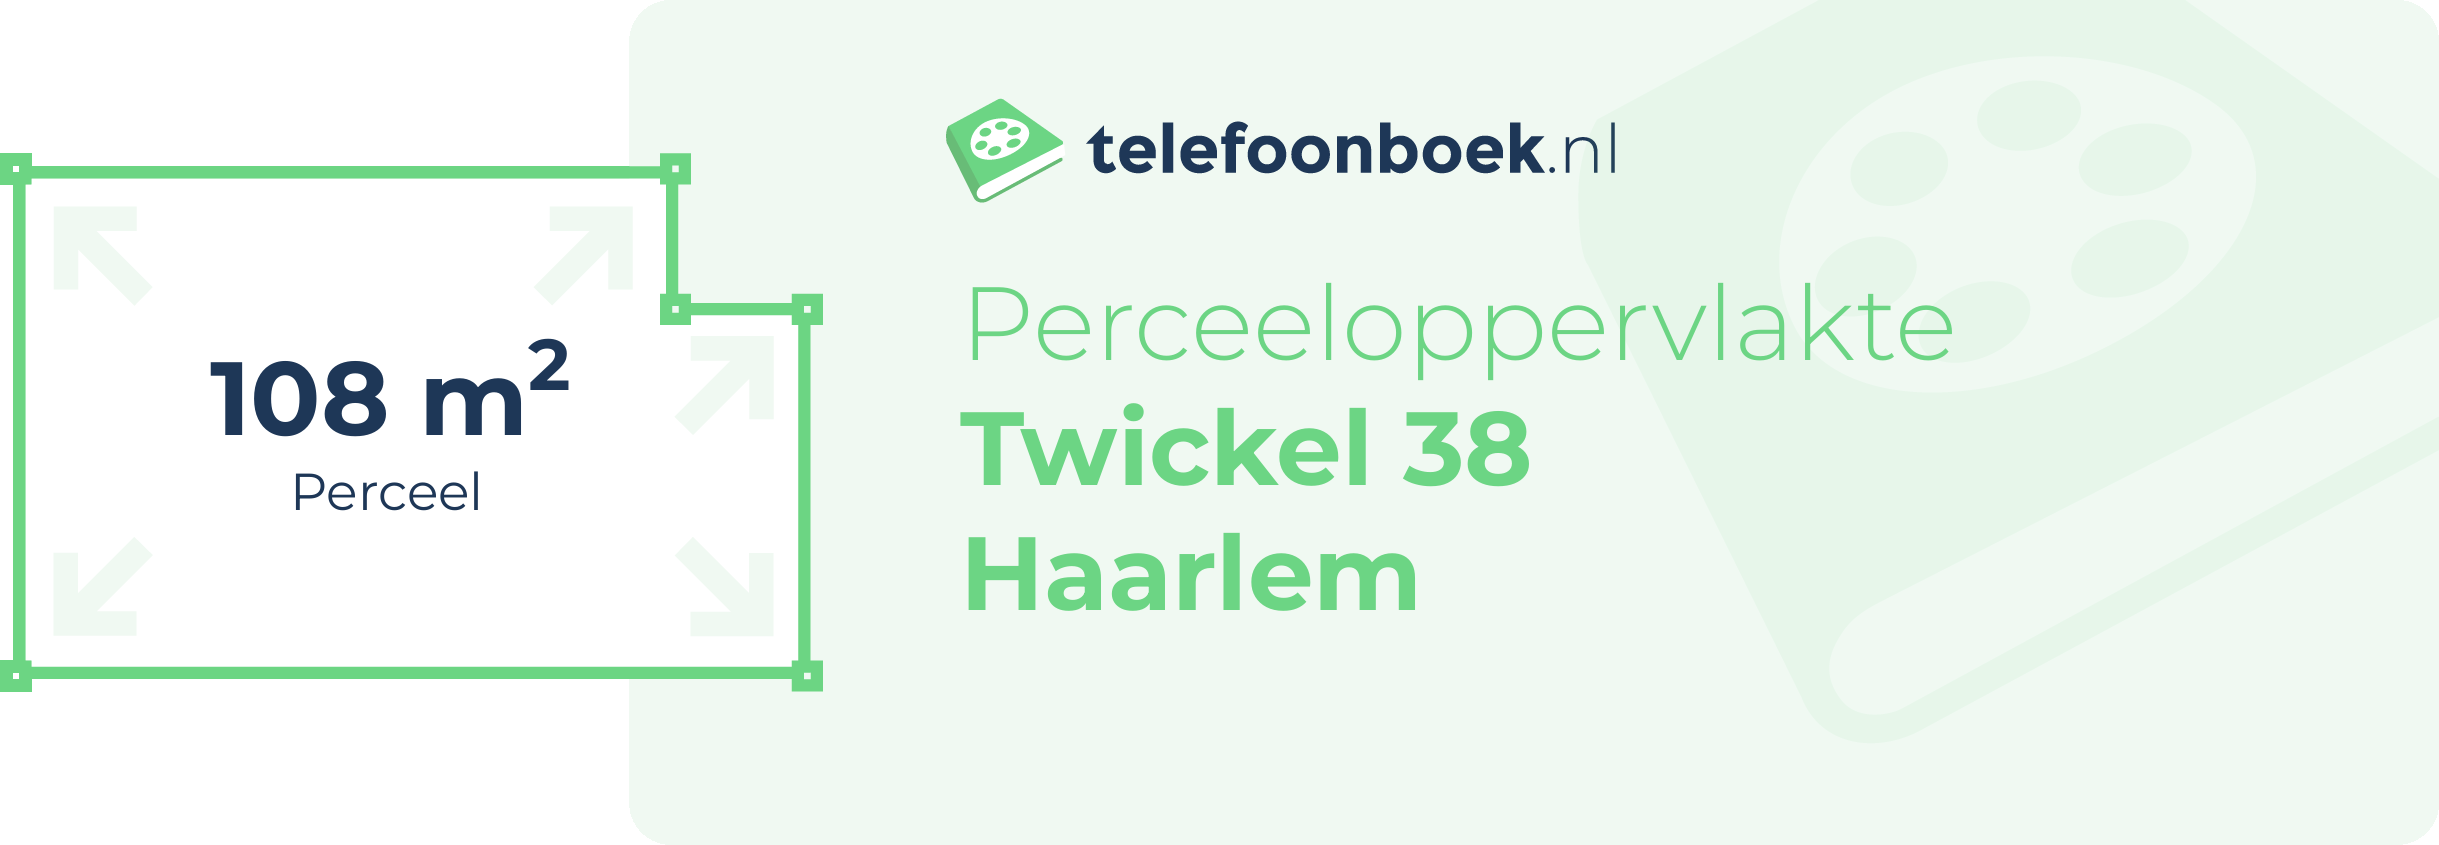 Perceeloppervlakte Twickel 38 Haarlem